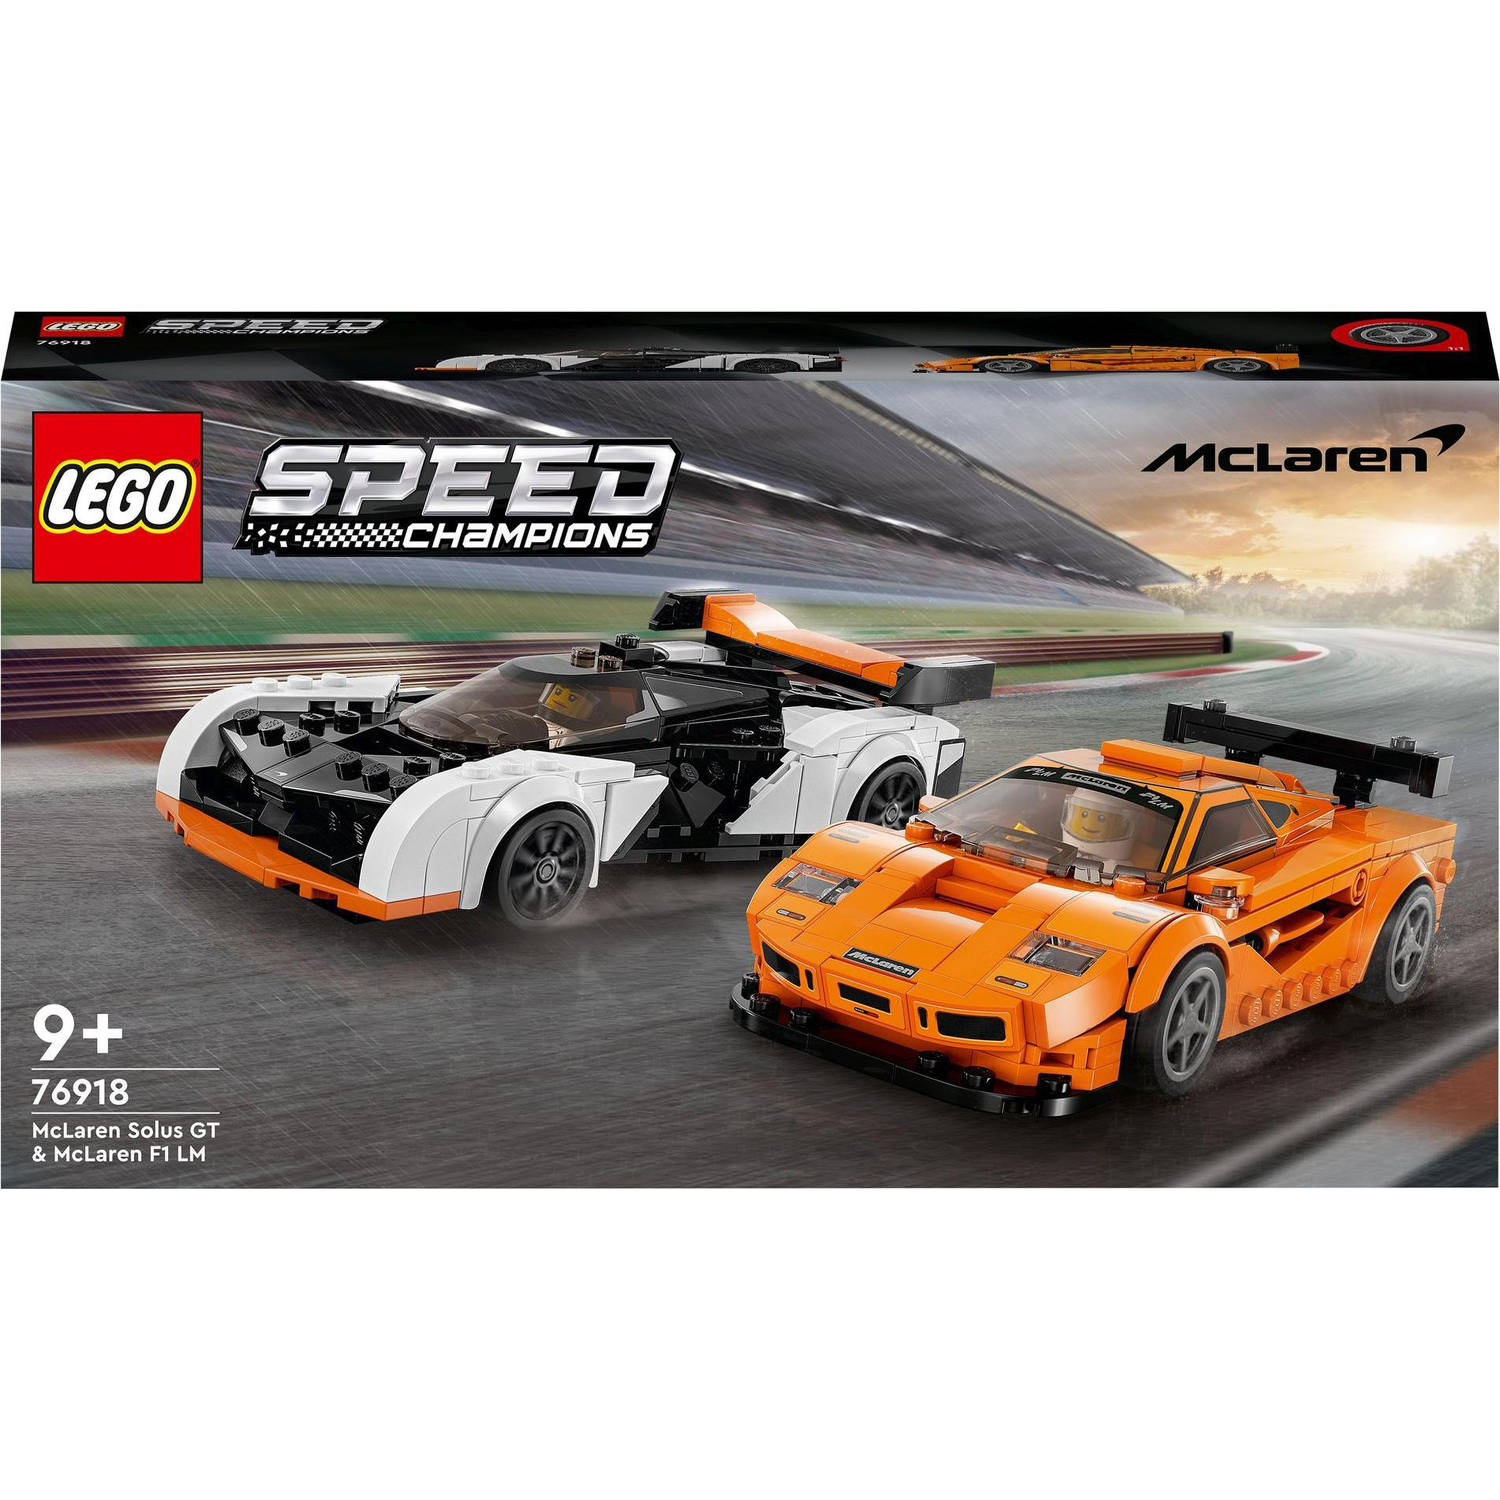 LEGOÂ® Speed Champions 76918 McLaren Solus GT & McLaren F1 LM